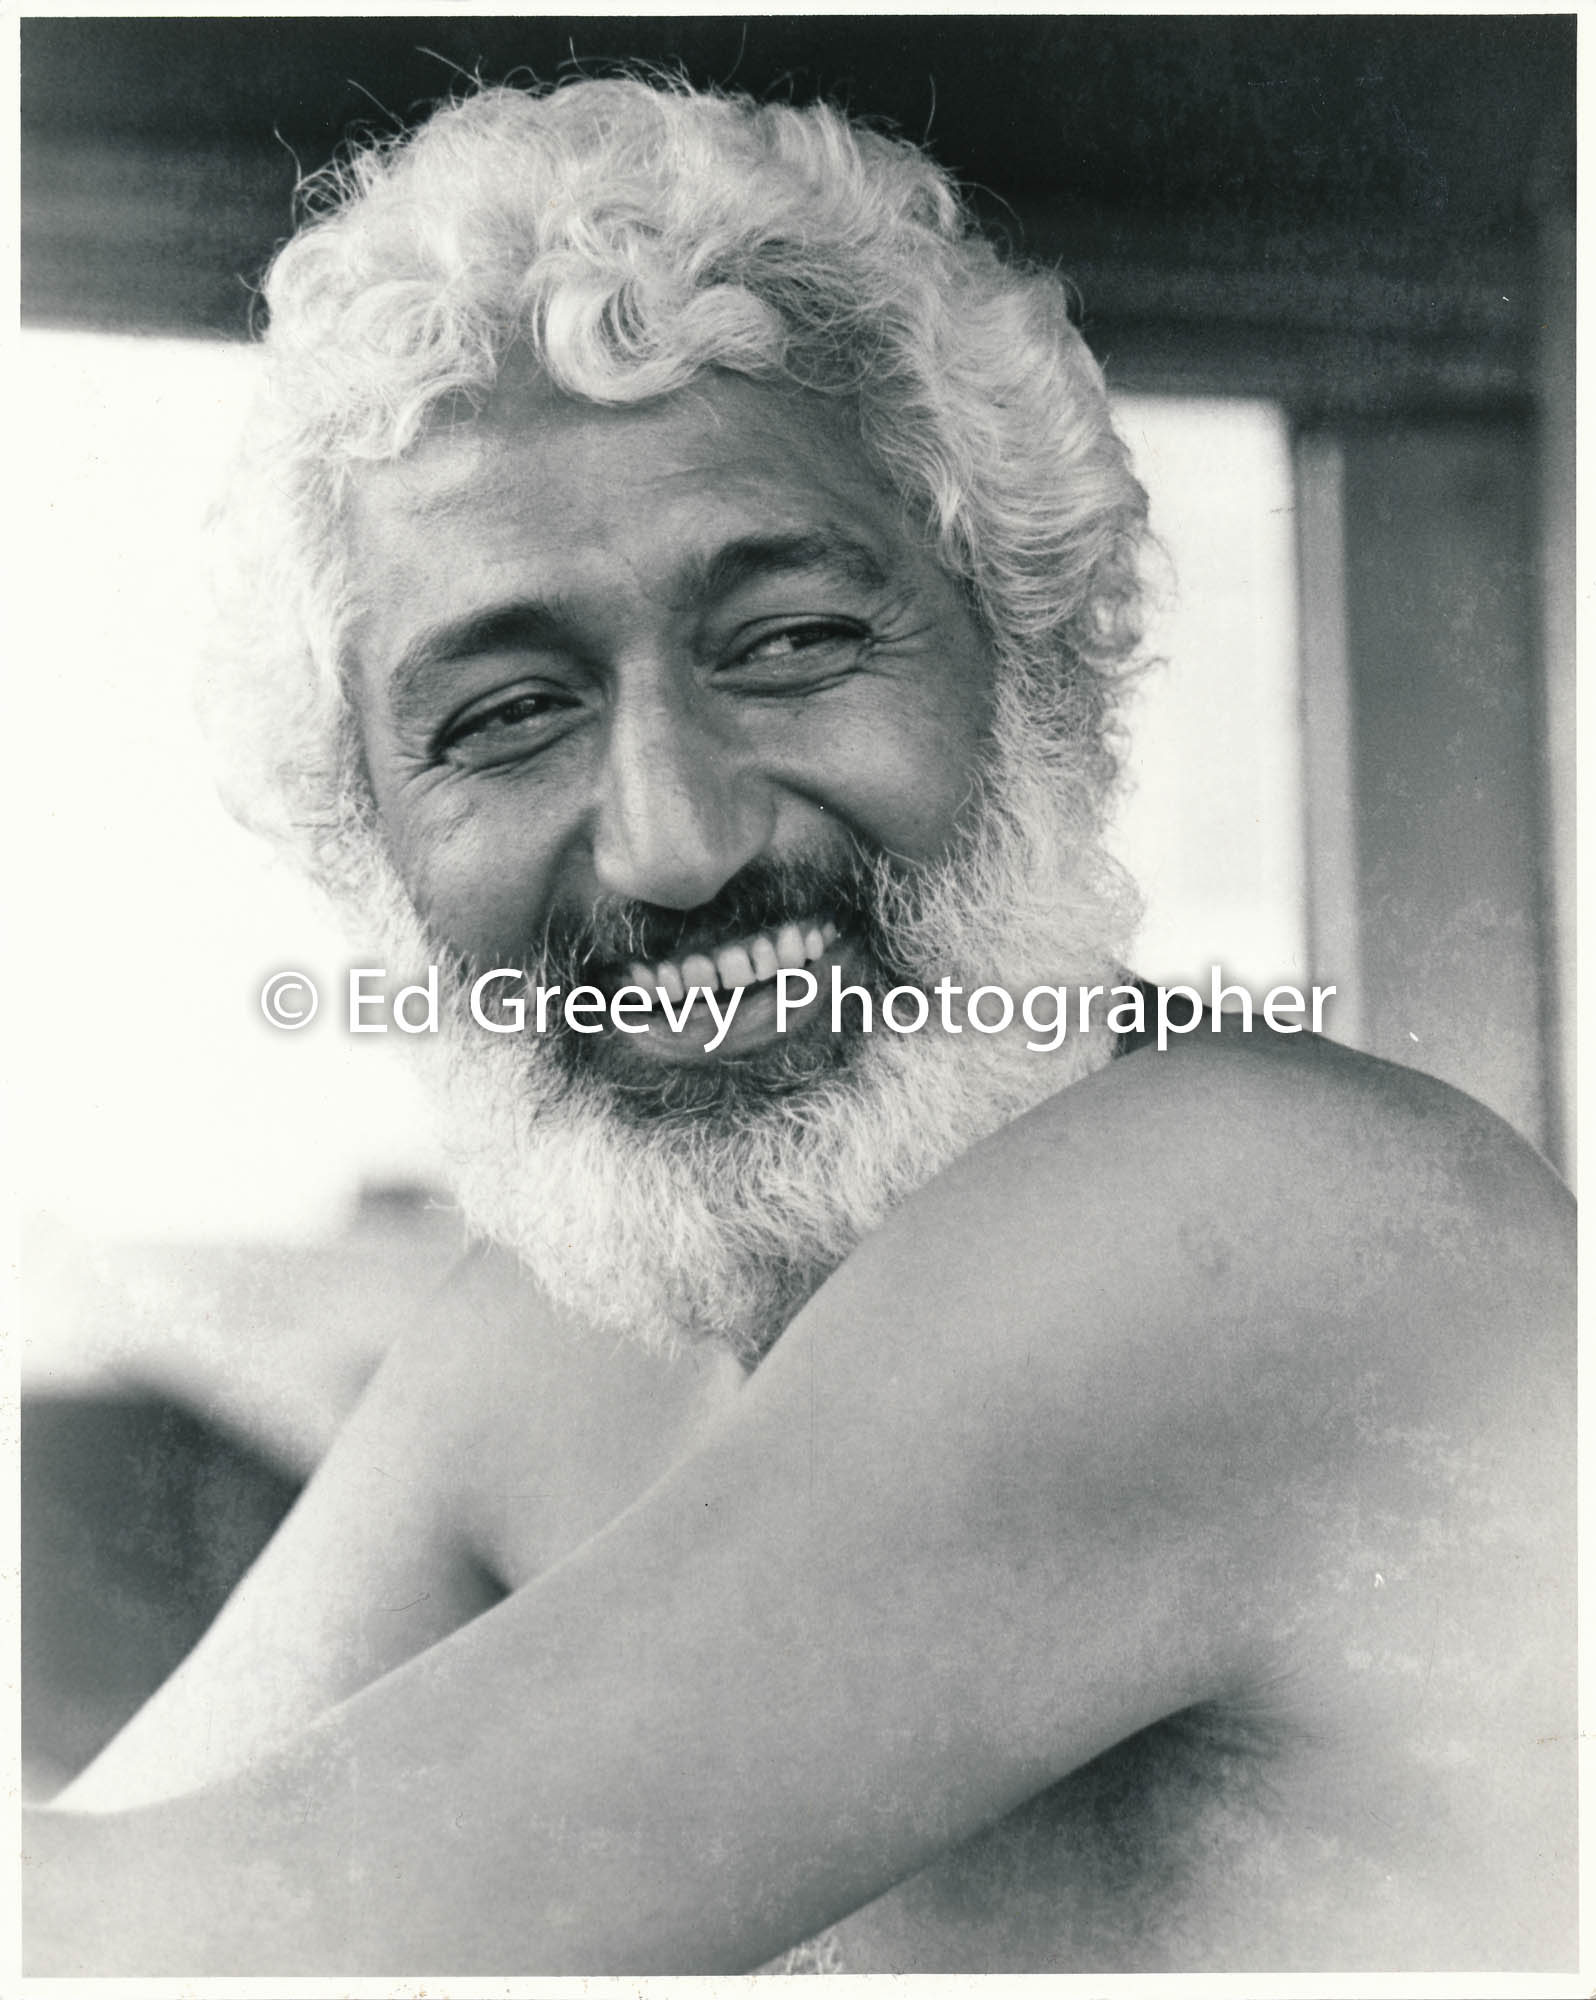 Puhipau, Sand Island spokesman and leader (10 November 1979) Negative: 4090-3-3 | Ed Greevy Photographer